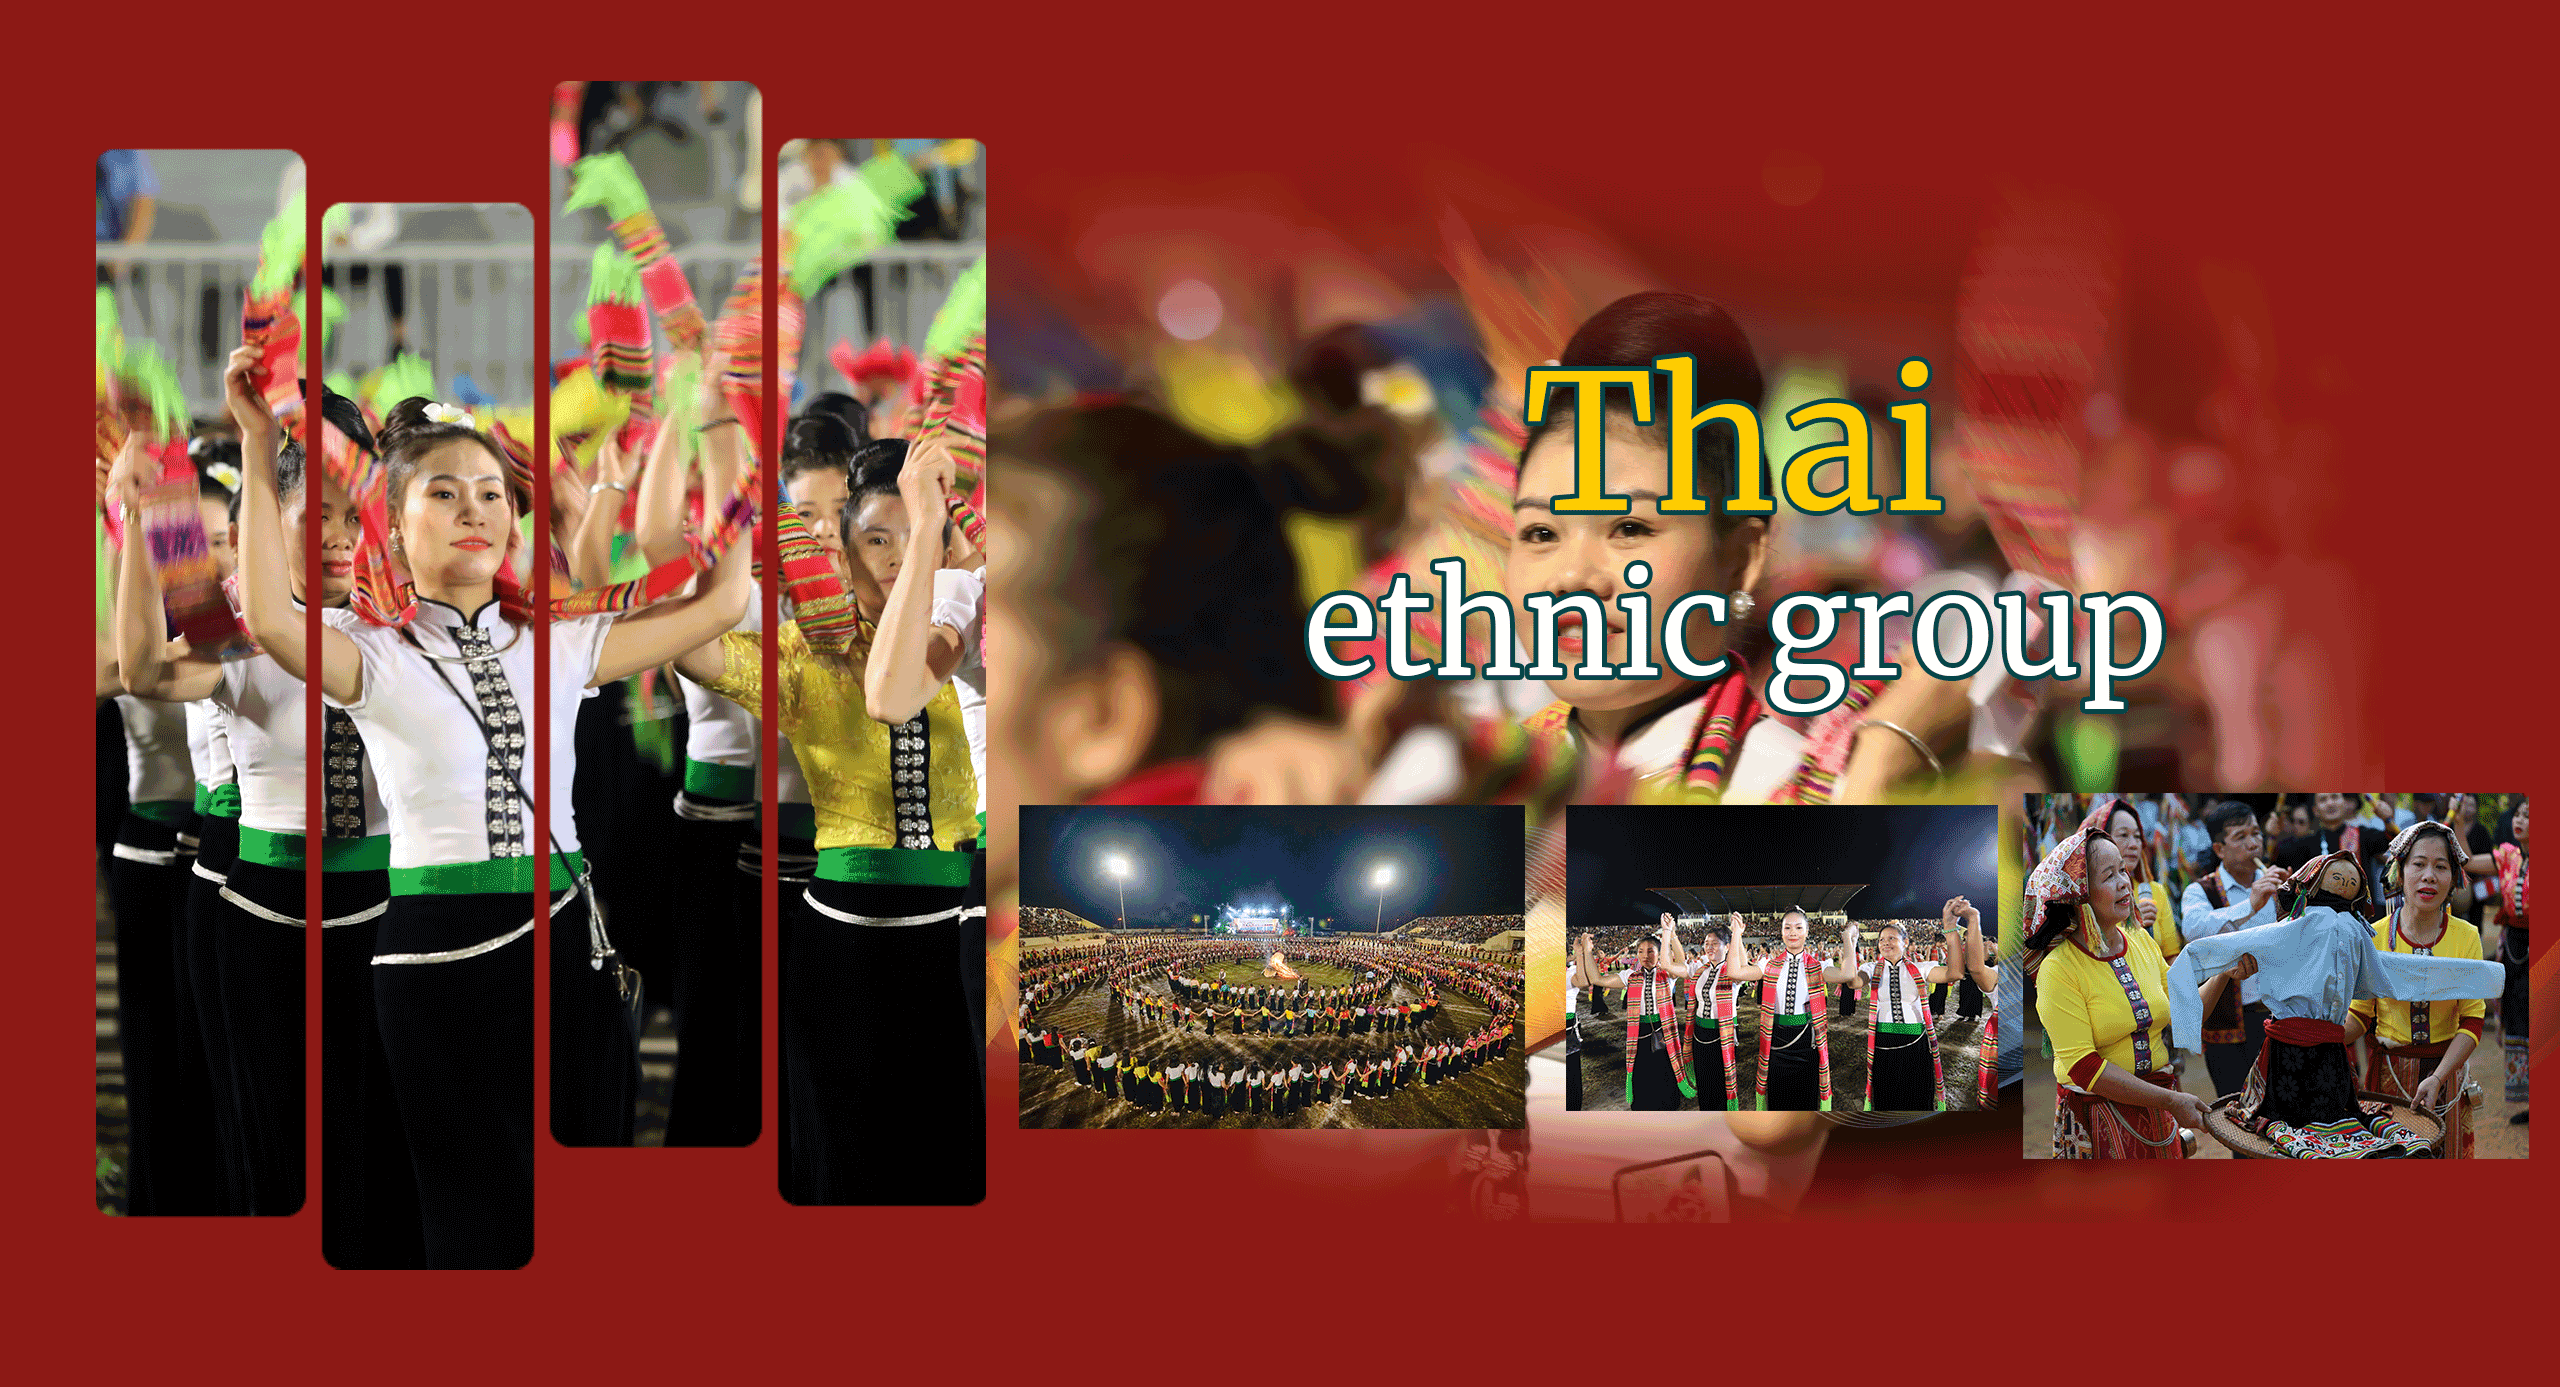 Thai ethnic group